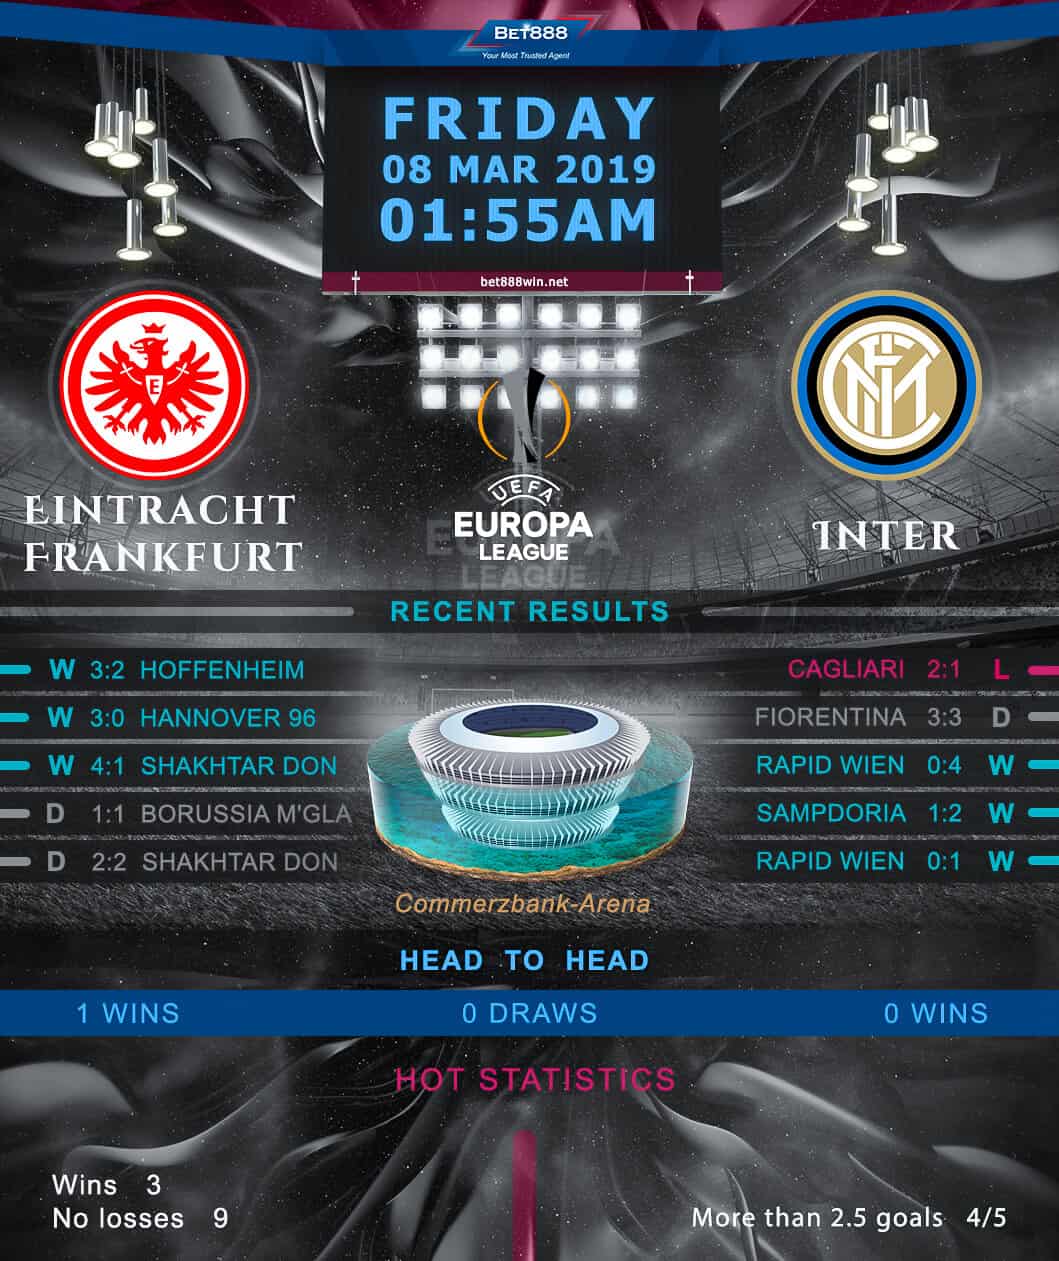 Eintracht Frankfurt vs Inter Milan 08/03/19